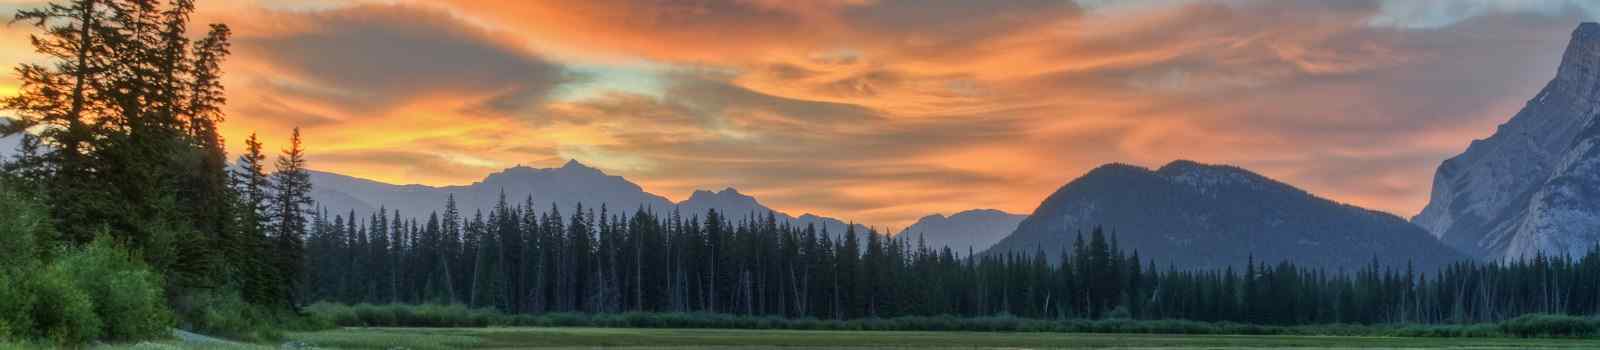 CA-SONORA Vermilion Lakes Sunrise near Banff National Park shutterstock 126689186